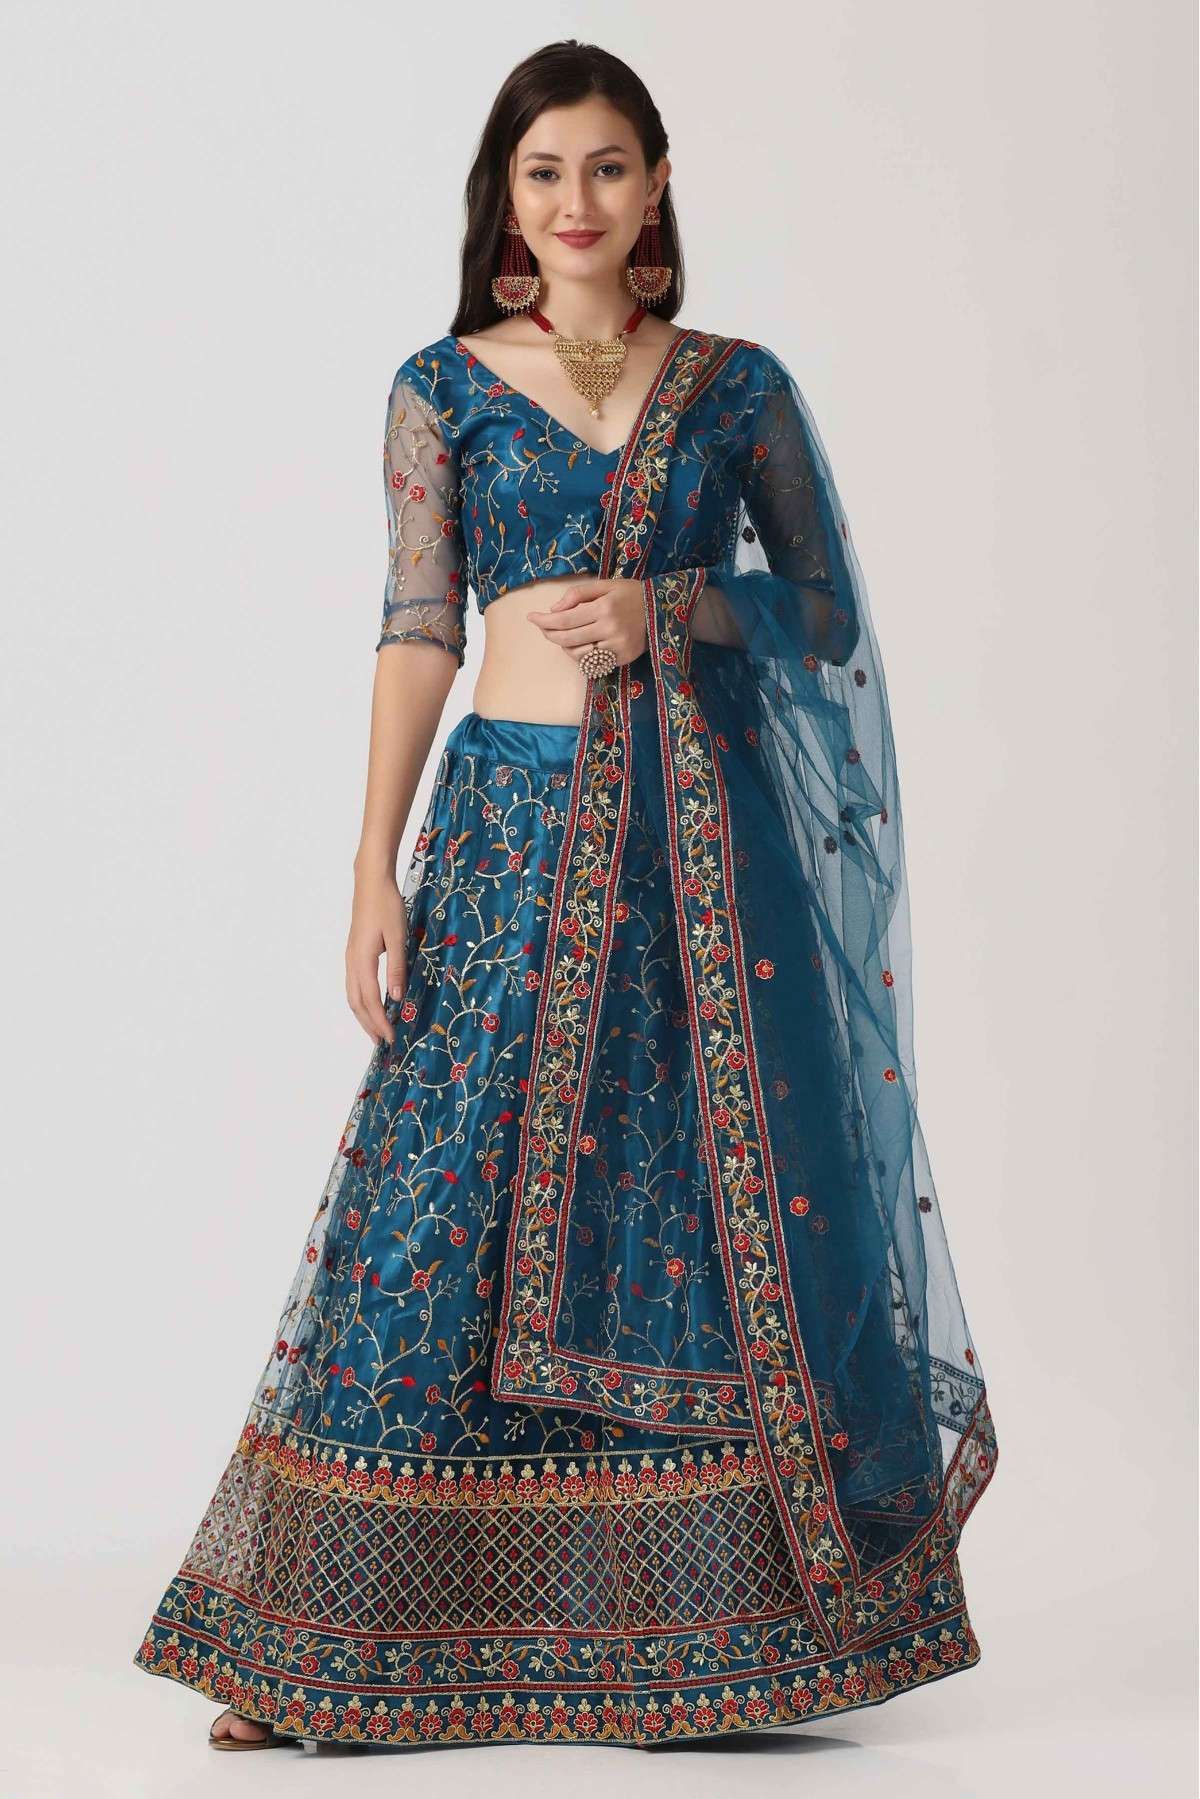 Net Embroidery Lehenga Choli In Teal Blue Colour - LD5680405